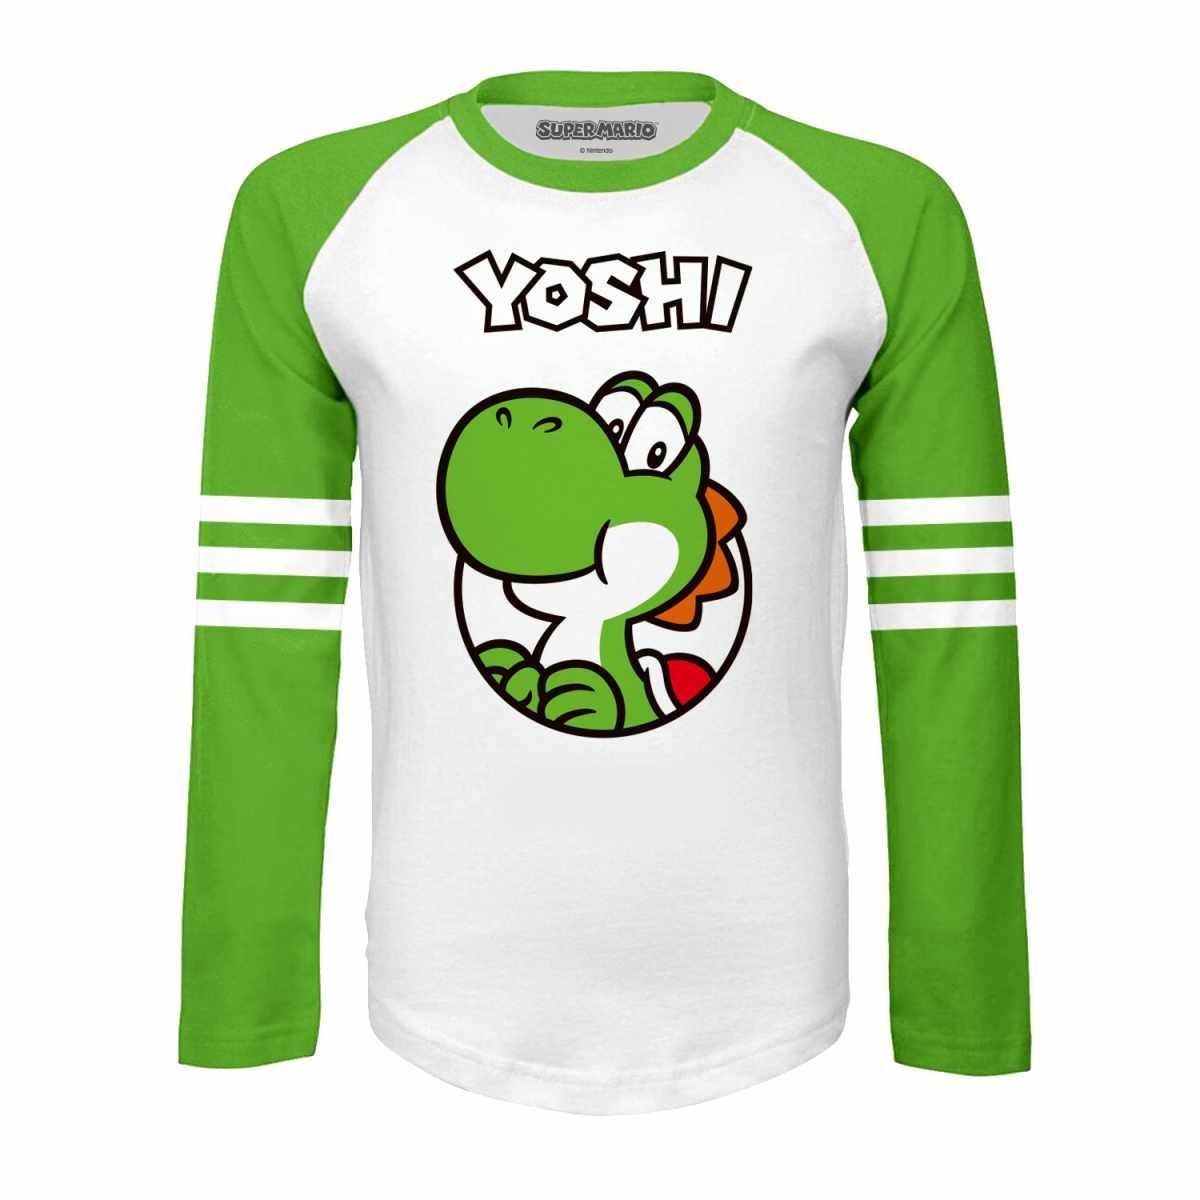 Super Mario  Tshirt YOSHI SINCE Enfant 